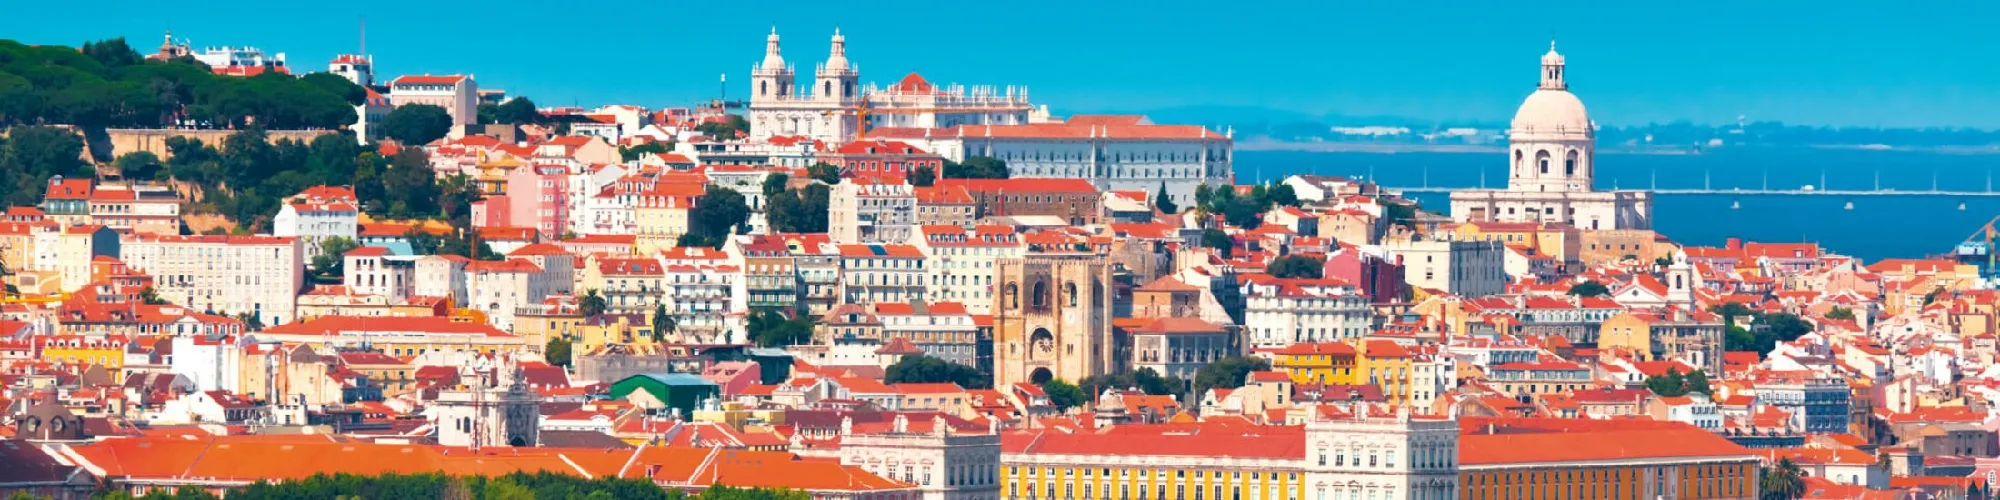 Städtereise Lissabon background image